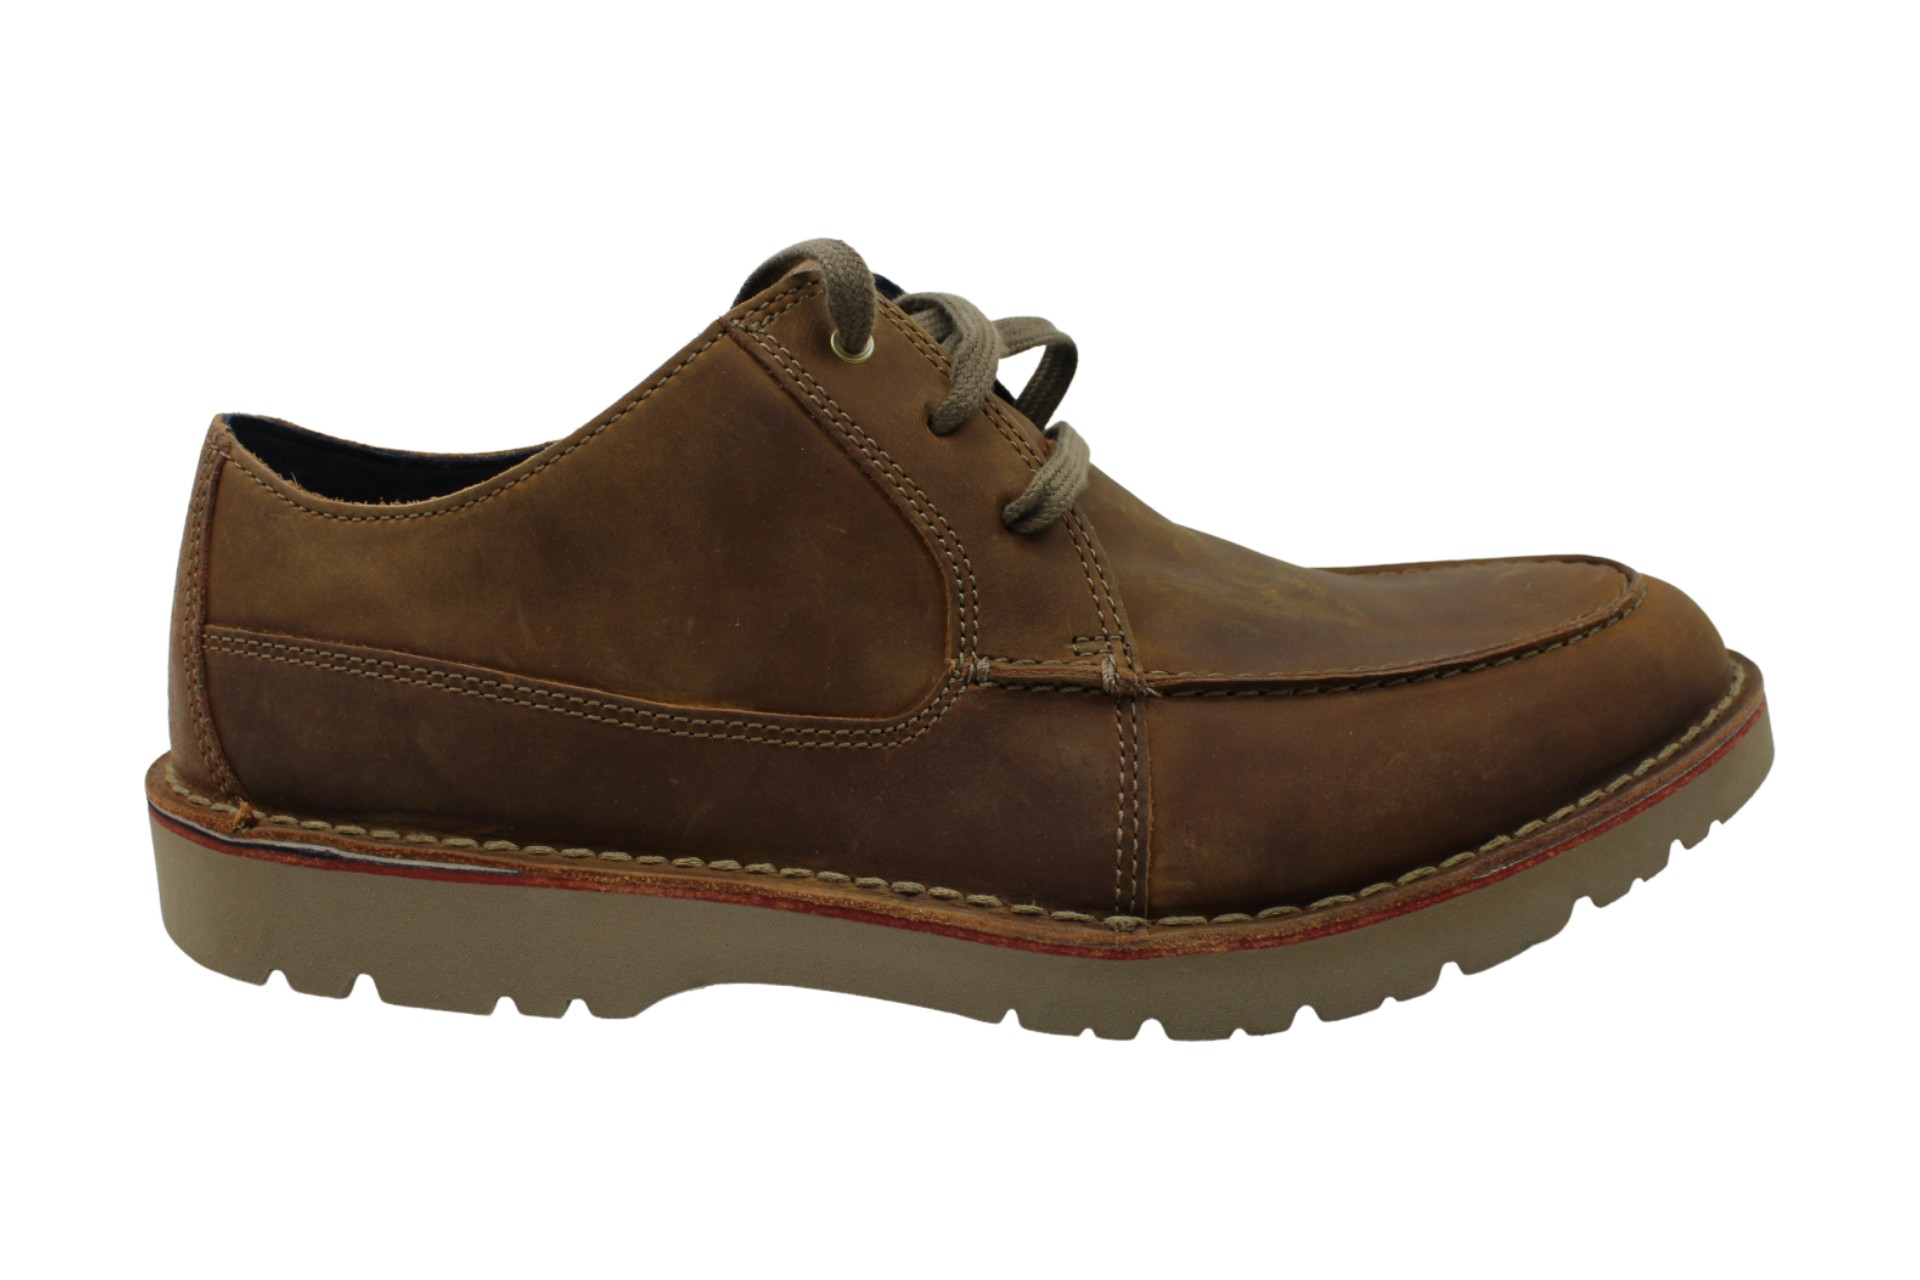 Clarks Men's Shoes av0ngp Work & Safety, Brown, Size 11.0 5x7R | eBay